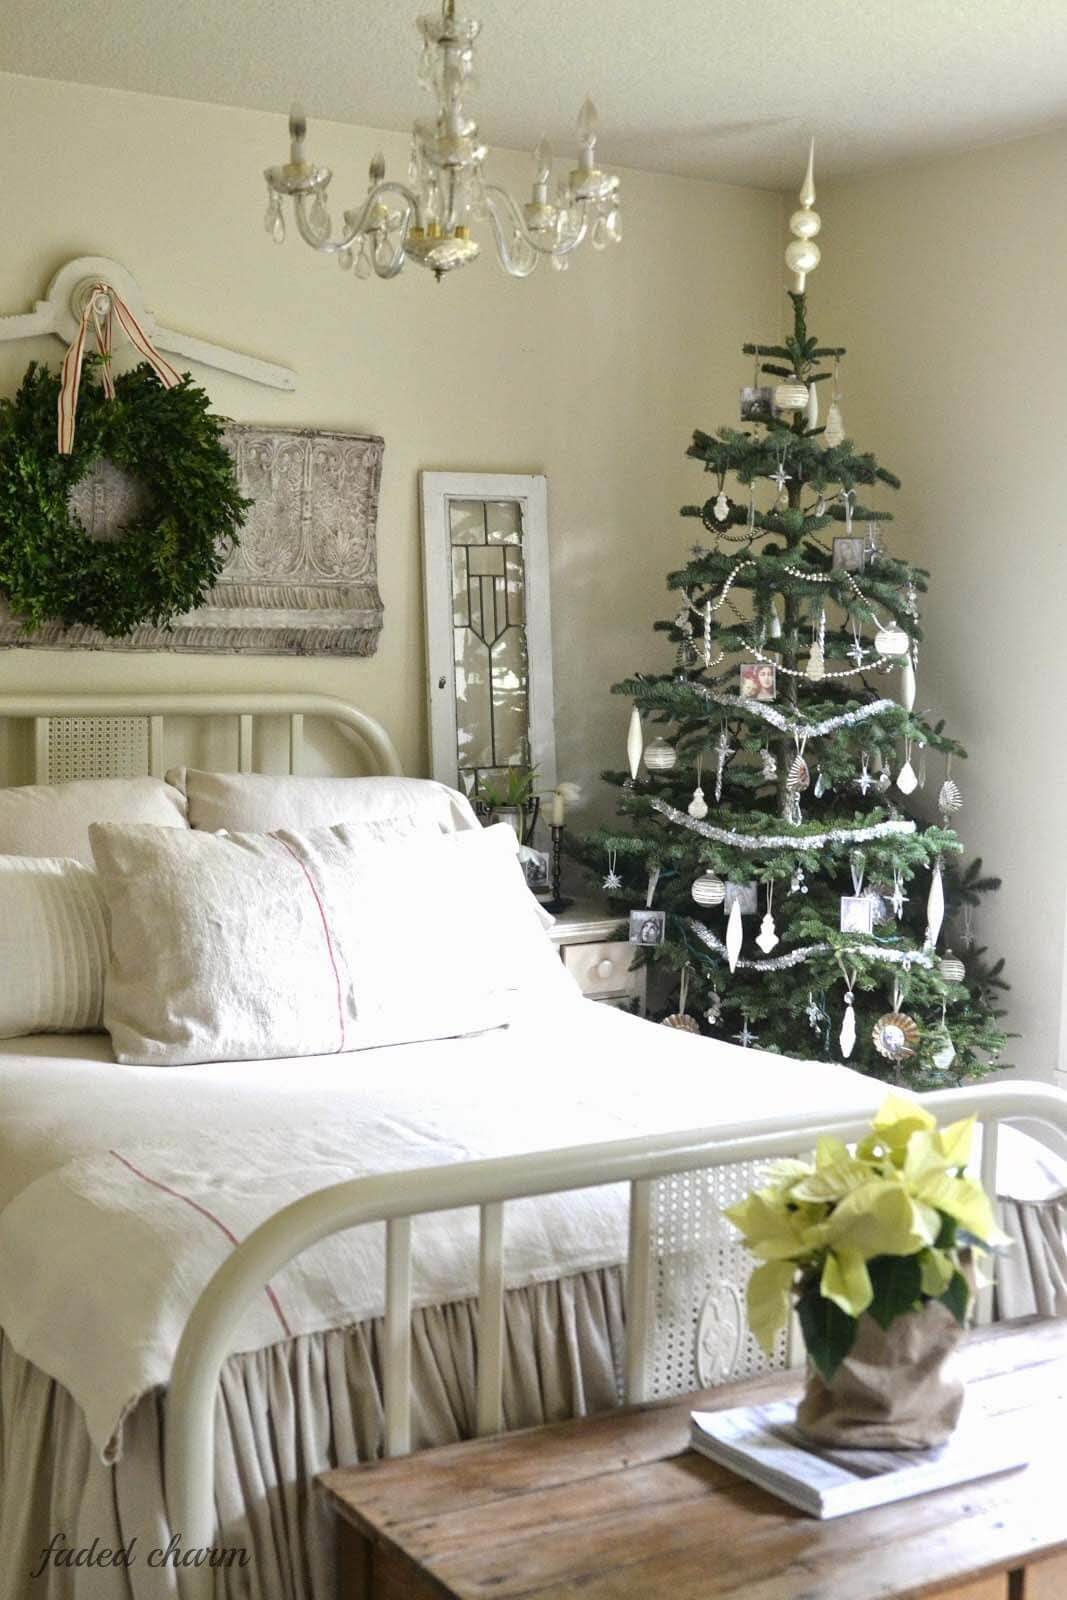 Christmas bedroom decorations ideas